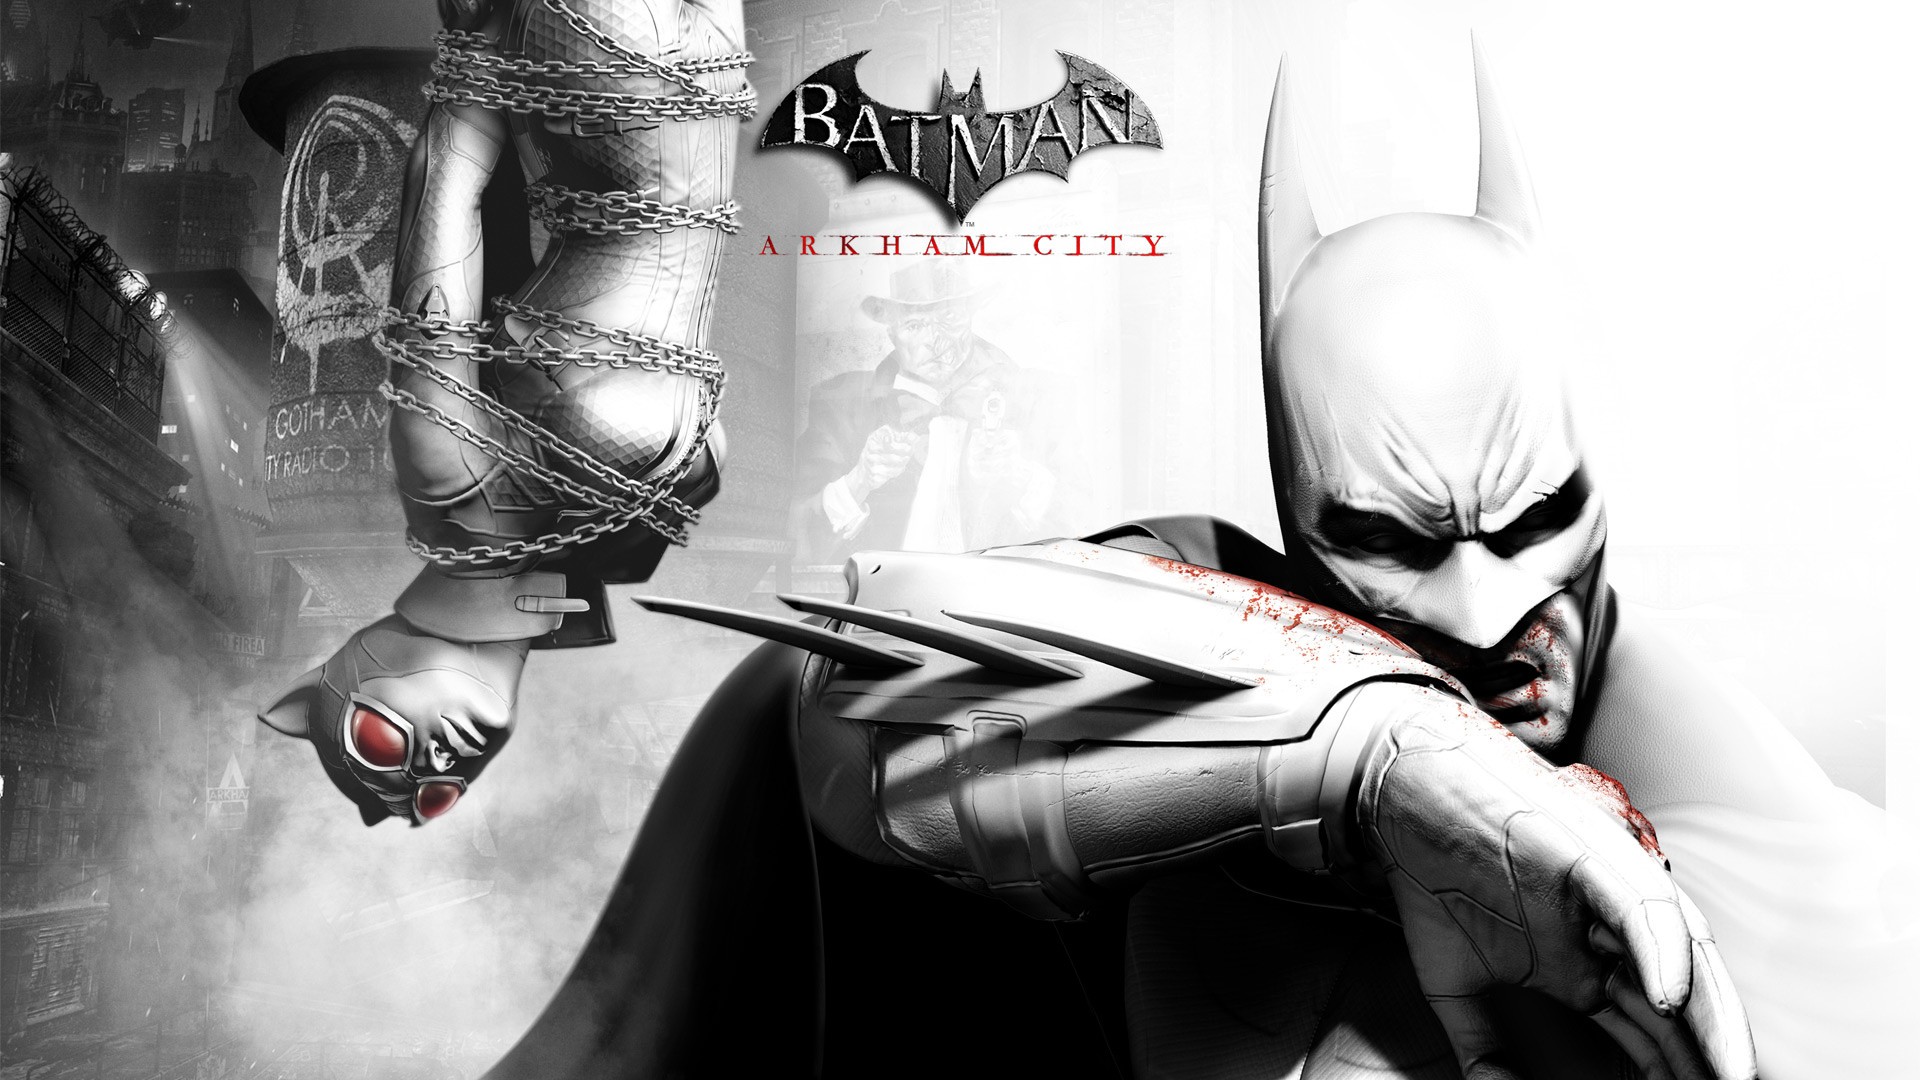 Batman Arkham City Wallpapers Hd Desktop And Mobile Backgrounds